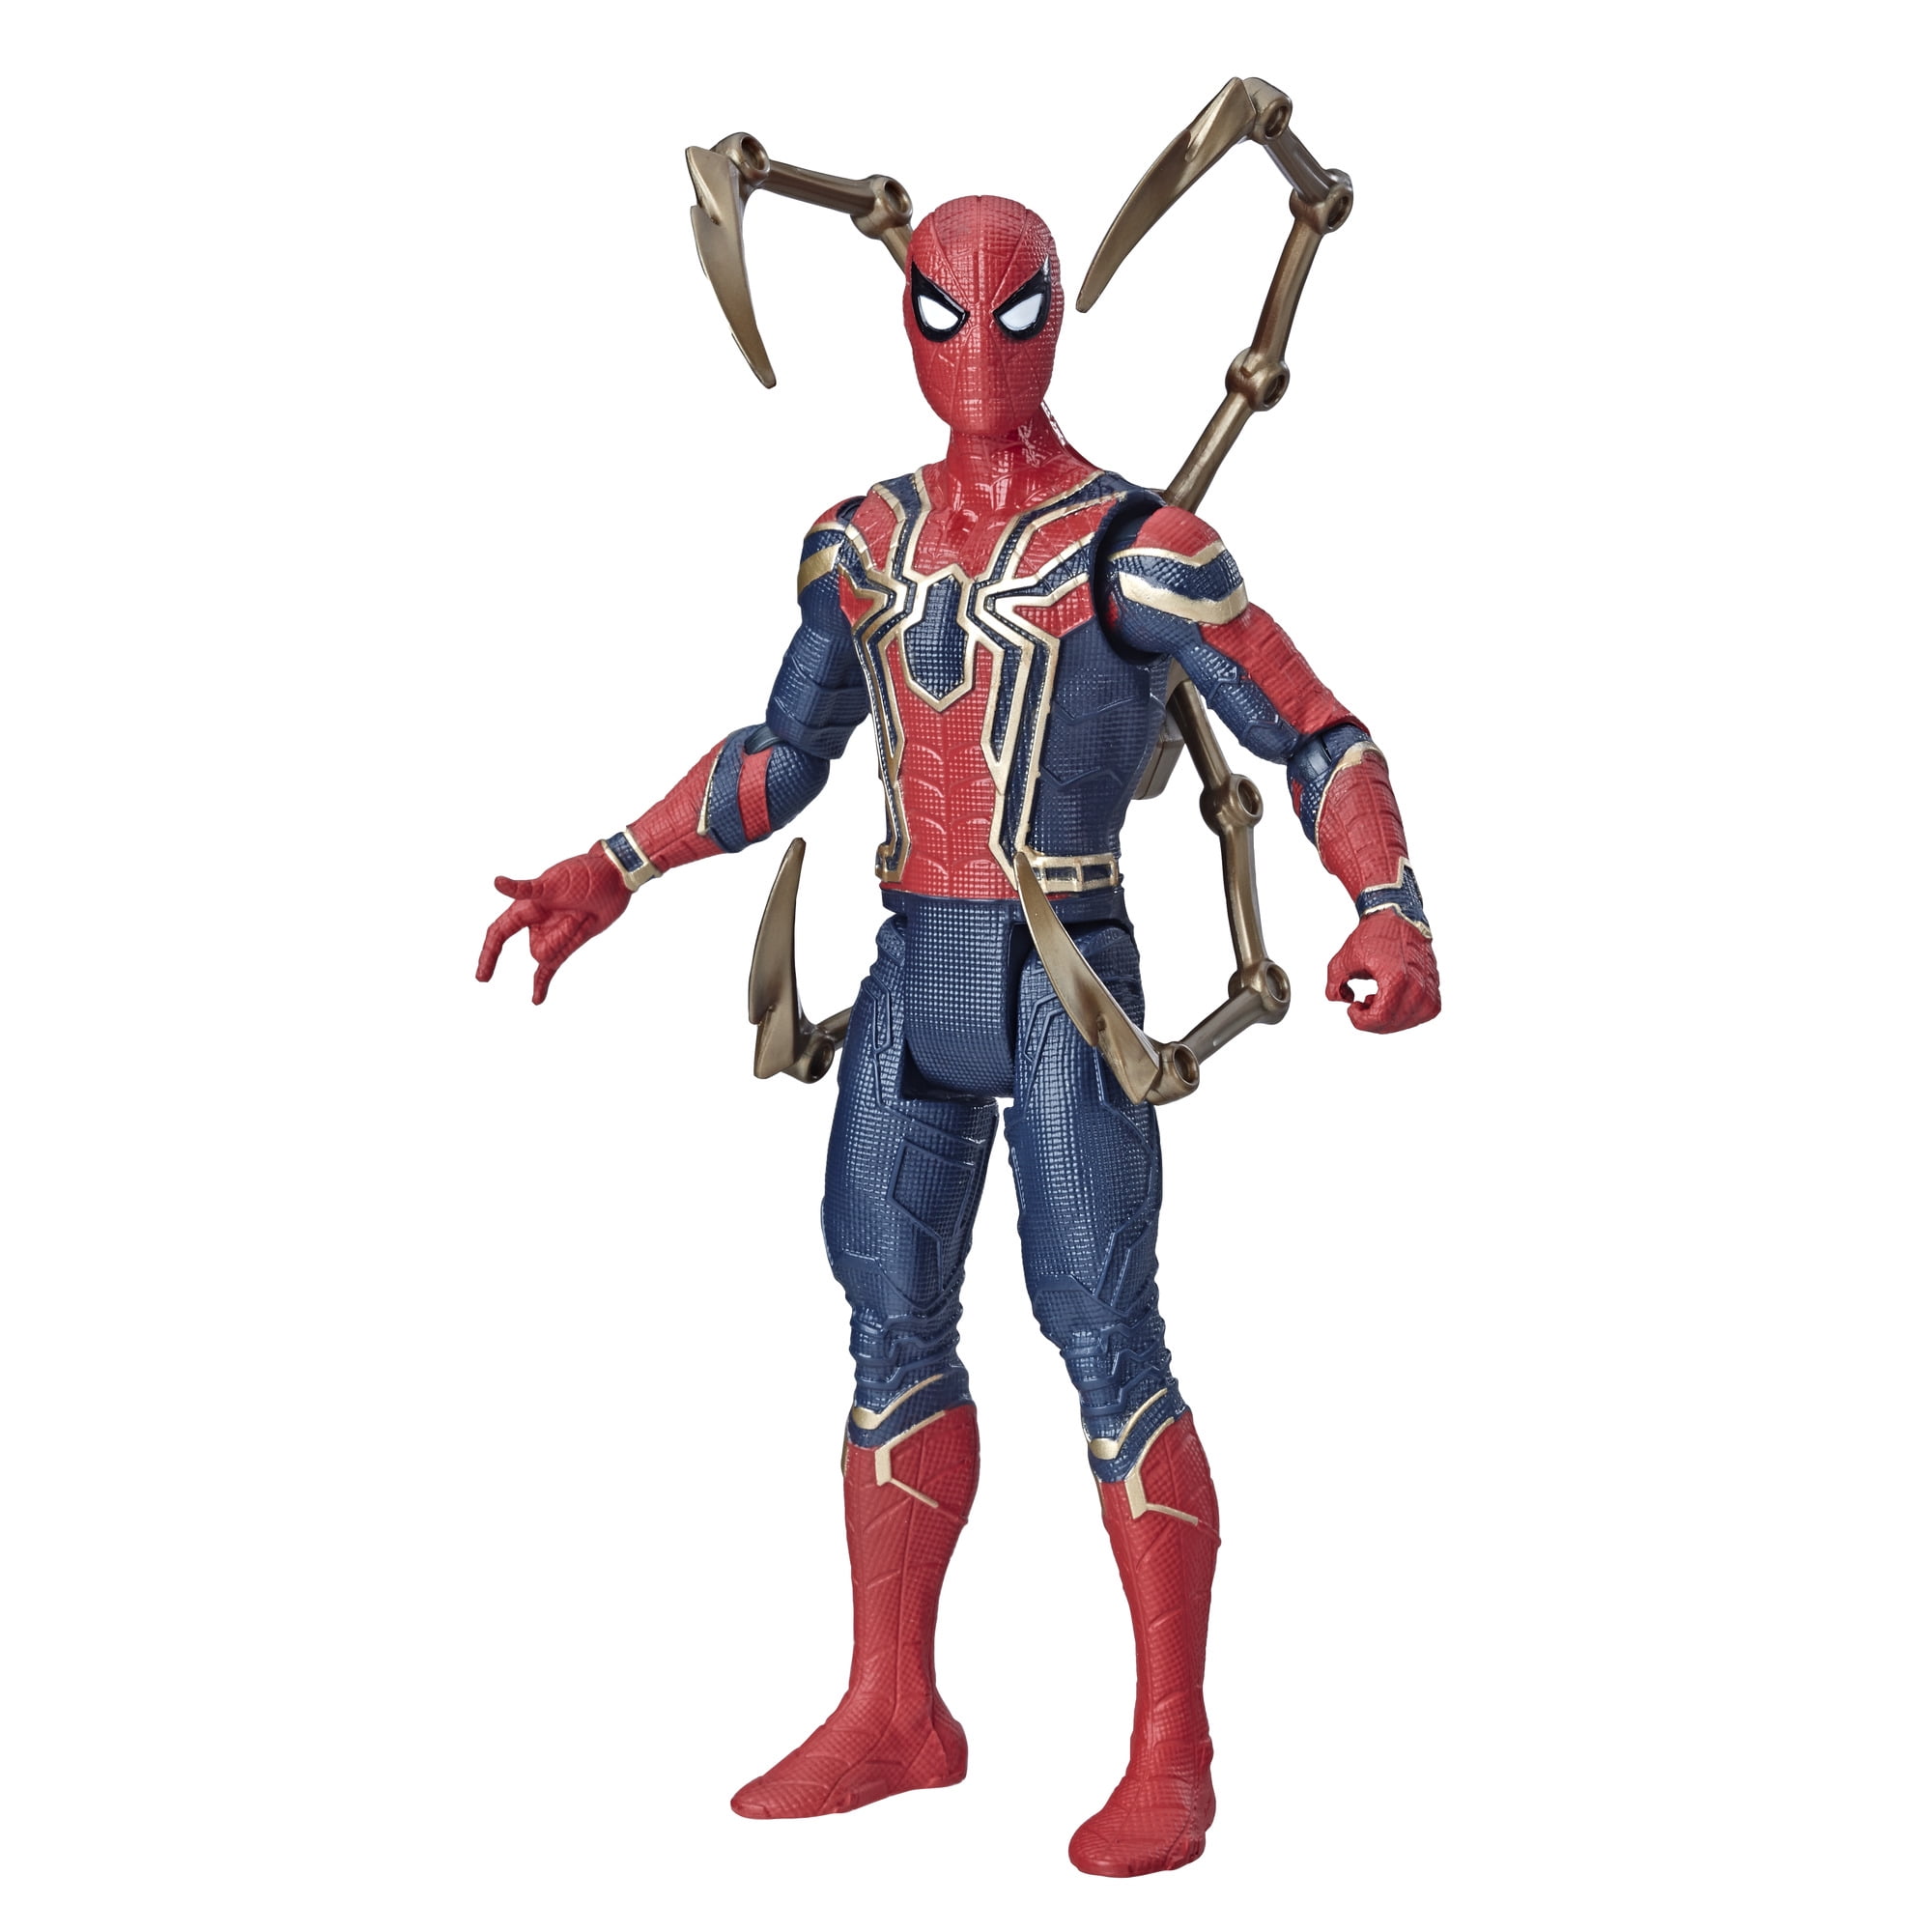 New Marvel Legends Avengers Infinity War Endgame Spider Man 6" Action Figure Toy 